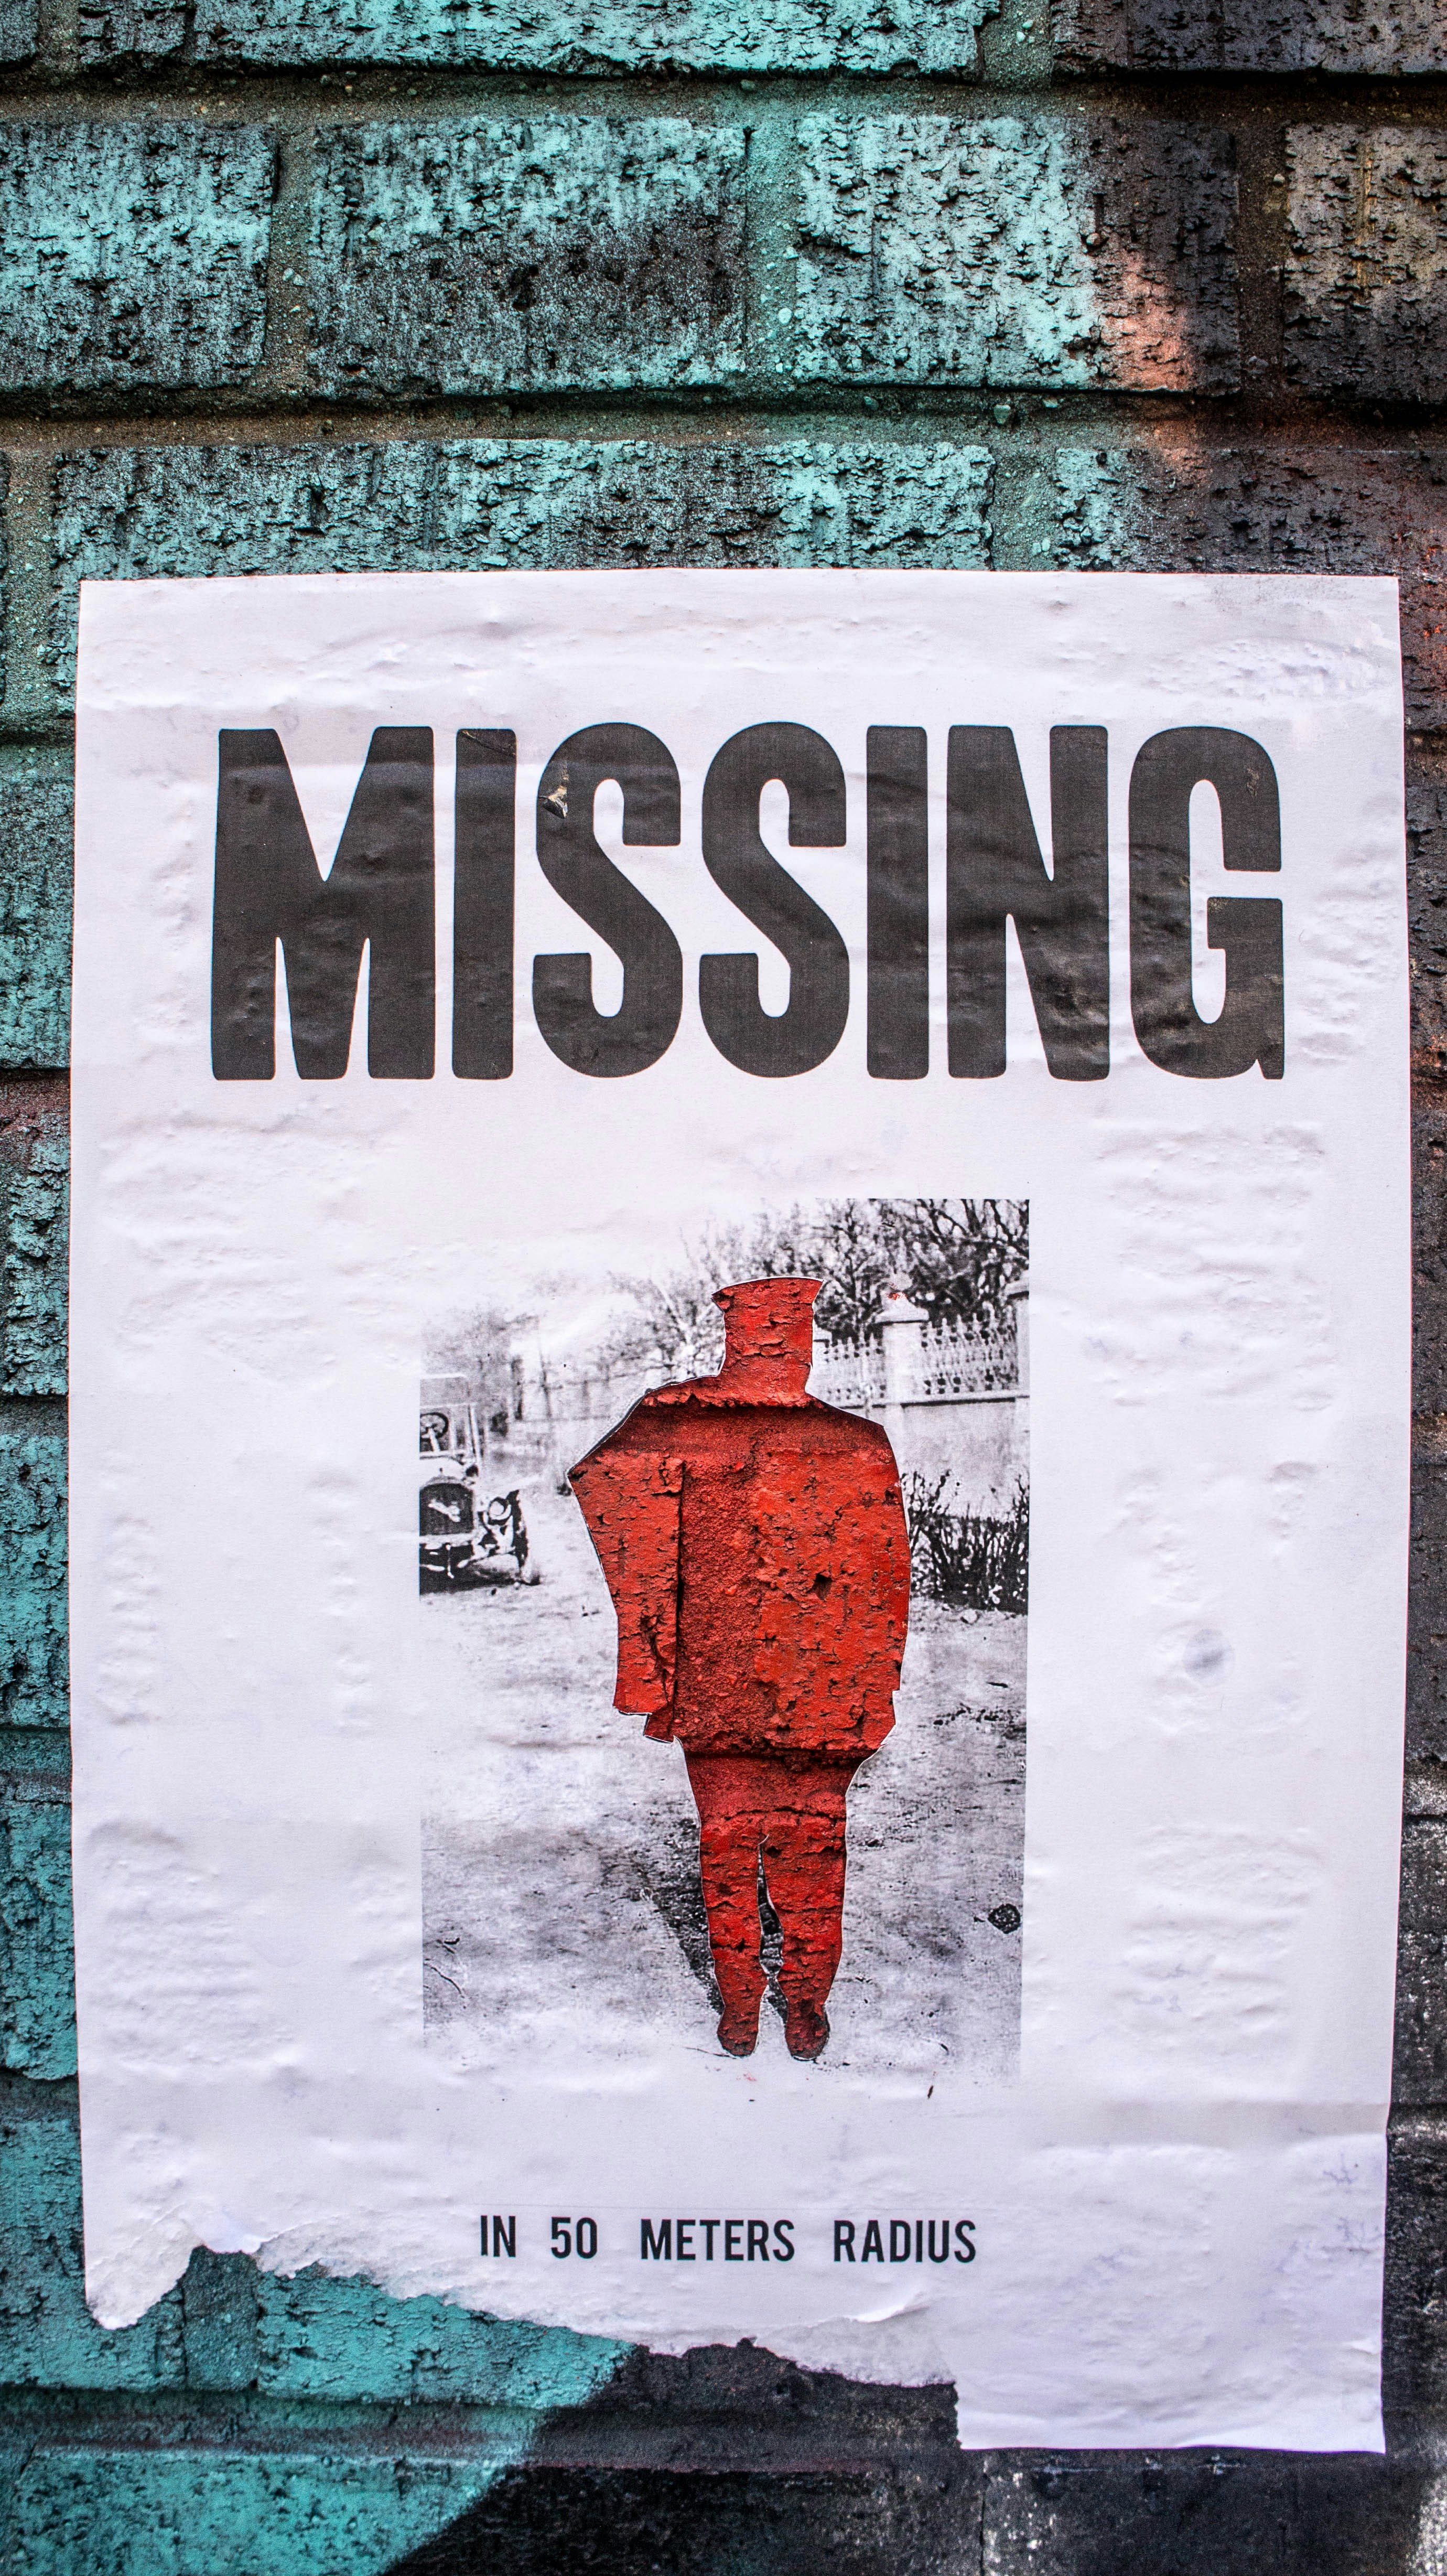 A 'MISSING' poster | Source: Unsplash